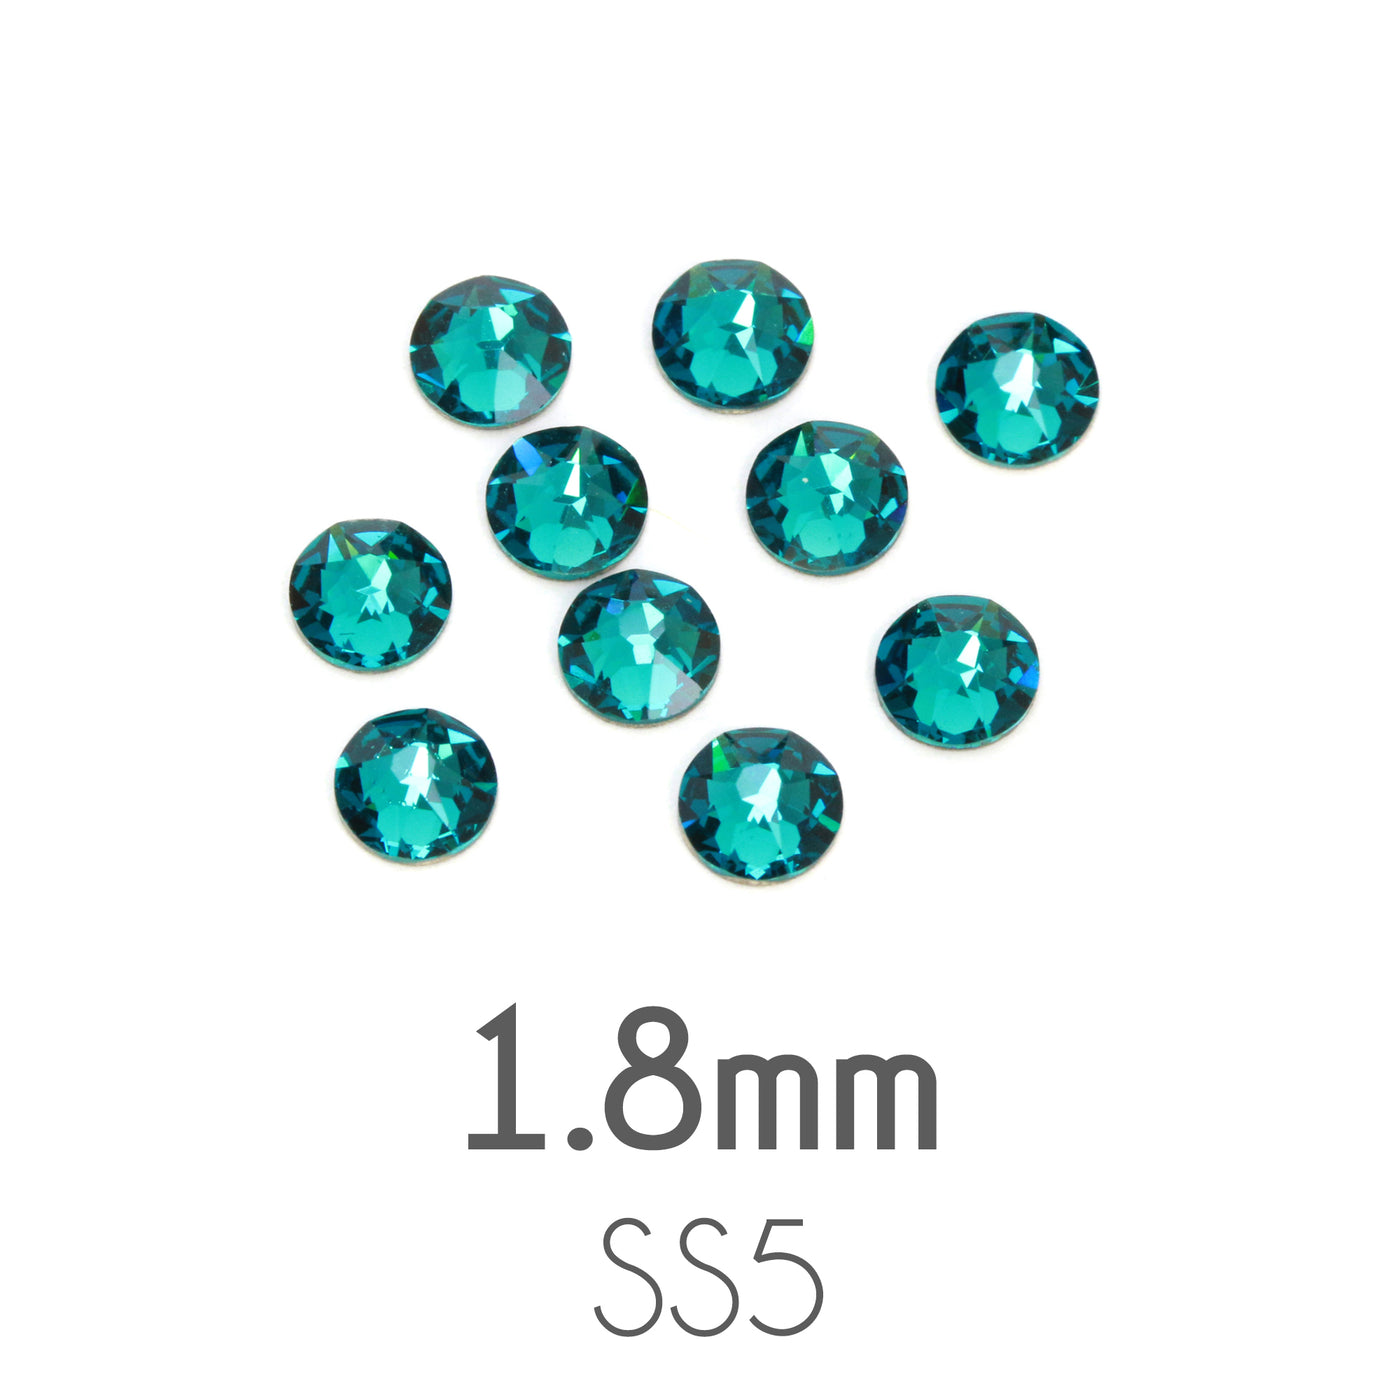 3.8mm Swarovski Flat Back Crystals, Capri Blue, Pack of 20 – Beaducation